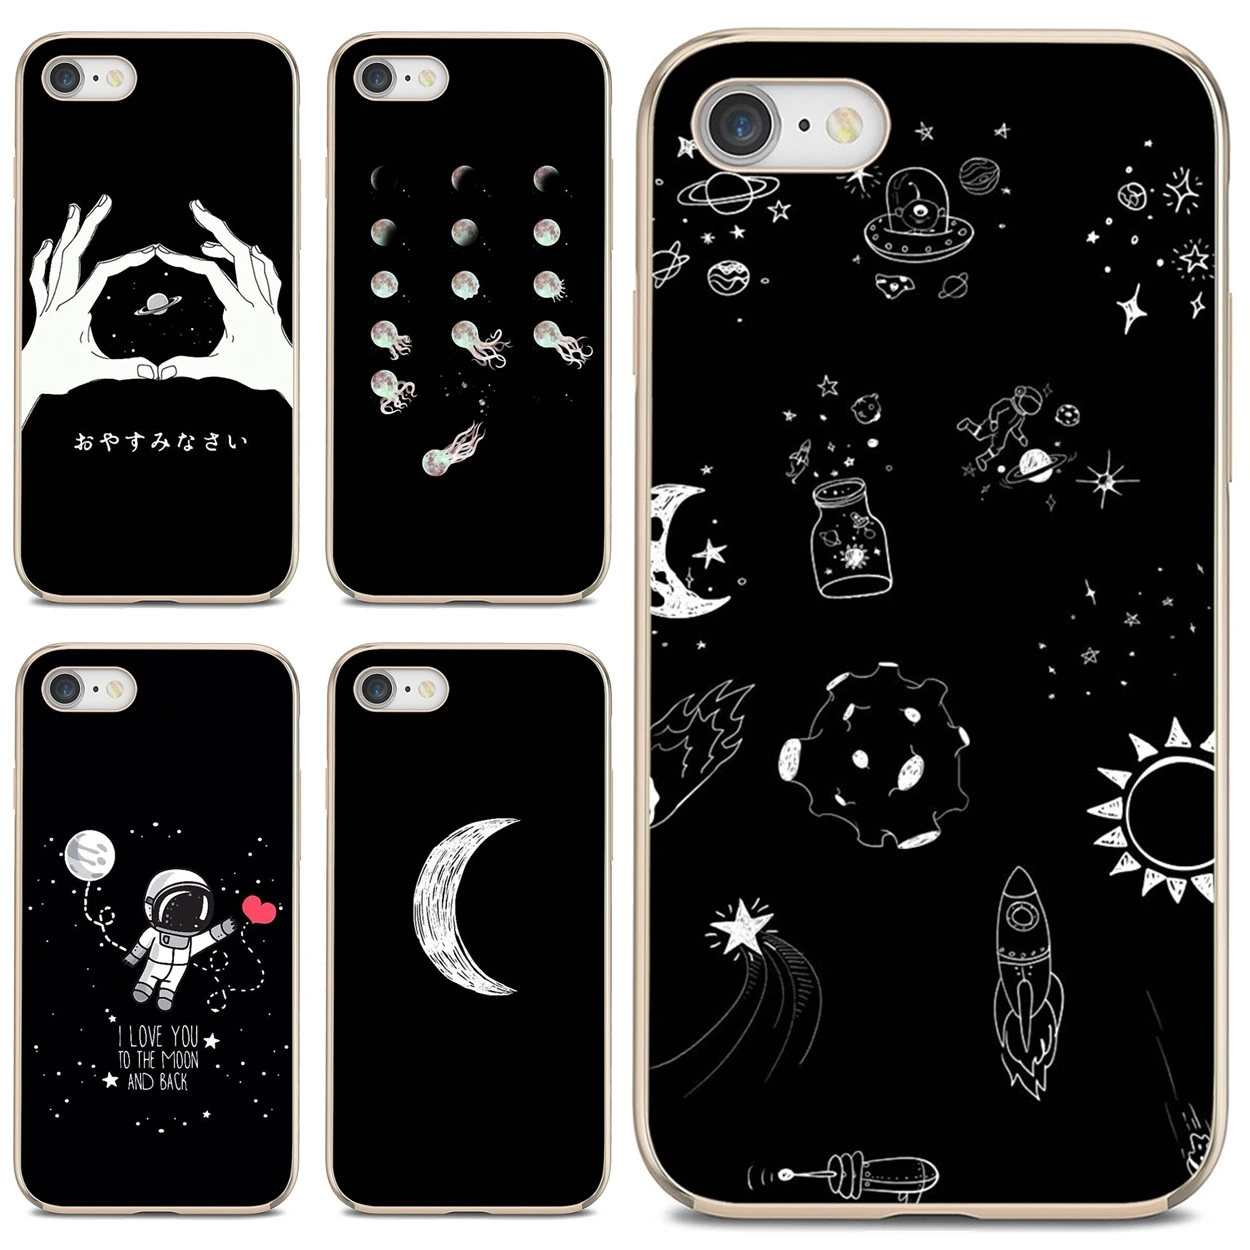 

Phone Case For iPhone 10 11 12 13 Mini Pro 4S 5S SE 5C 6 6S 7 8 X XR XS Plus Max 2020 black white moon stars space astronaut